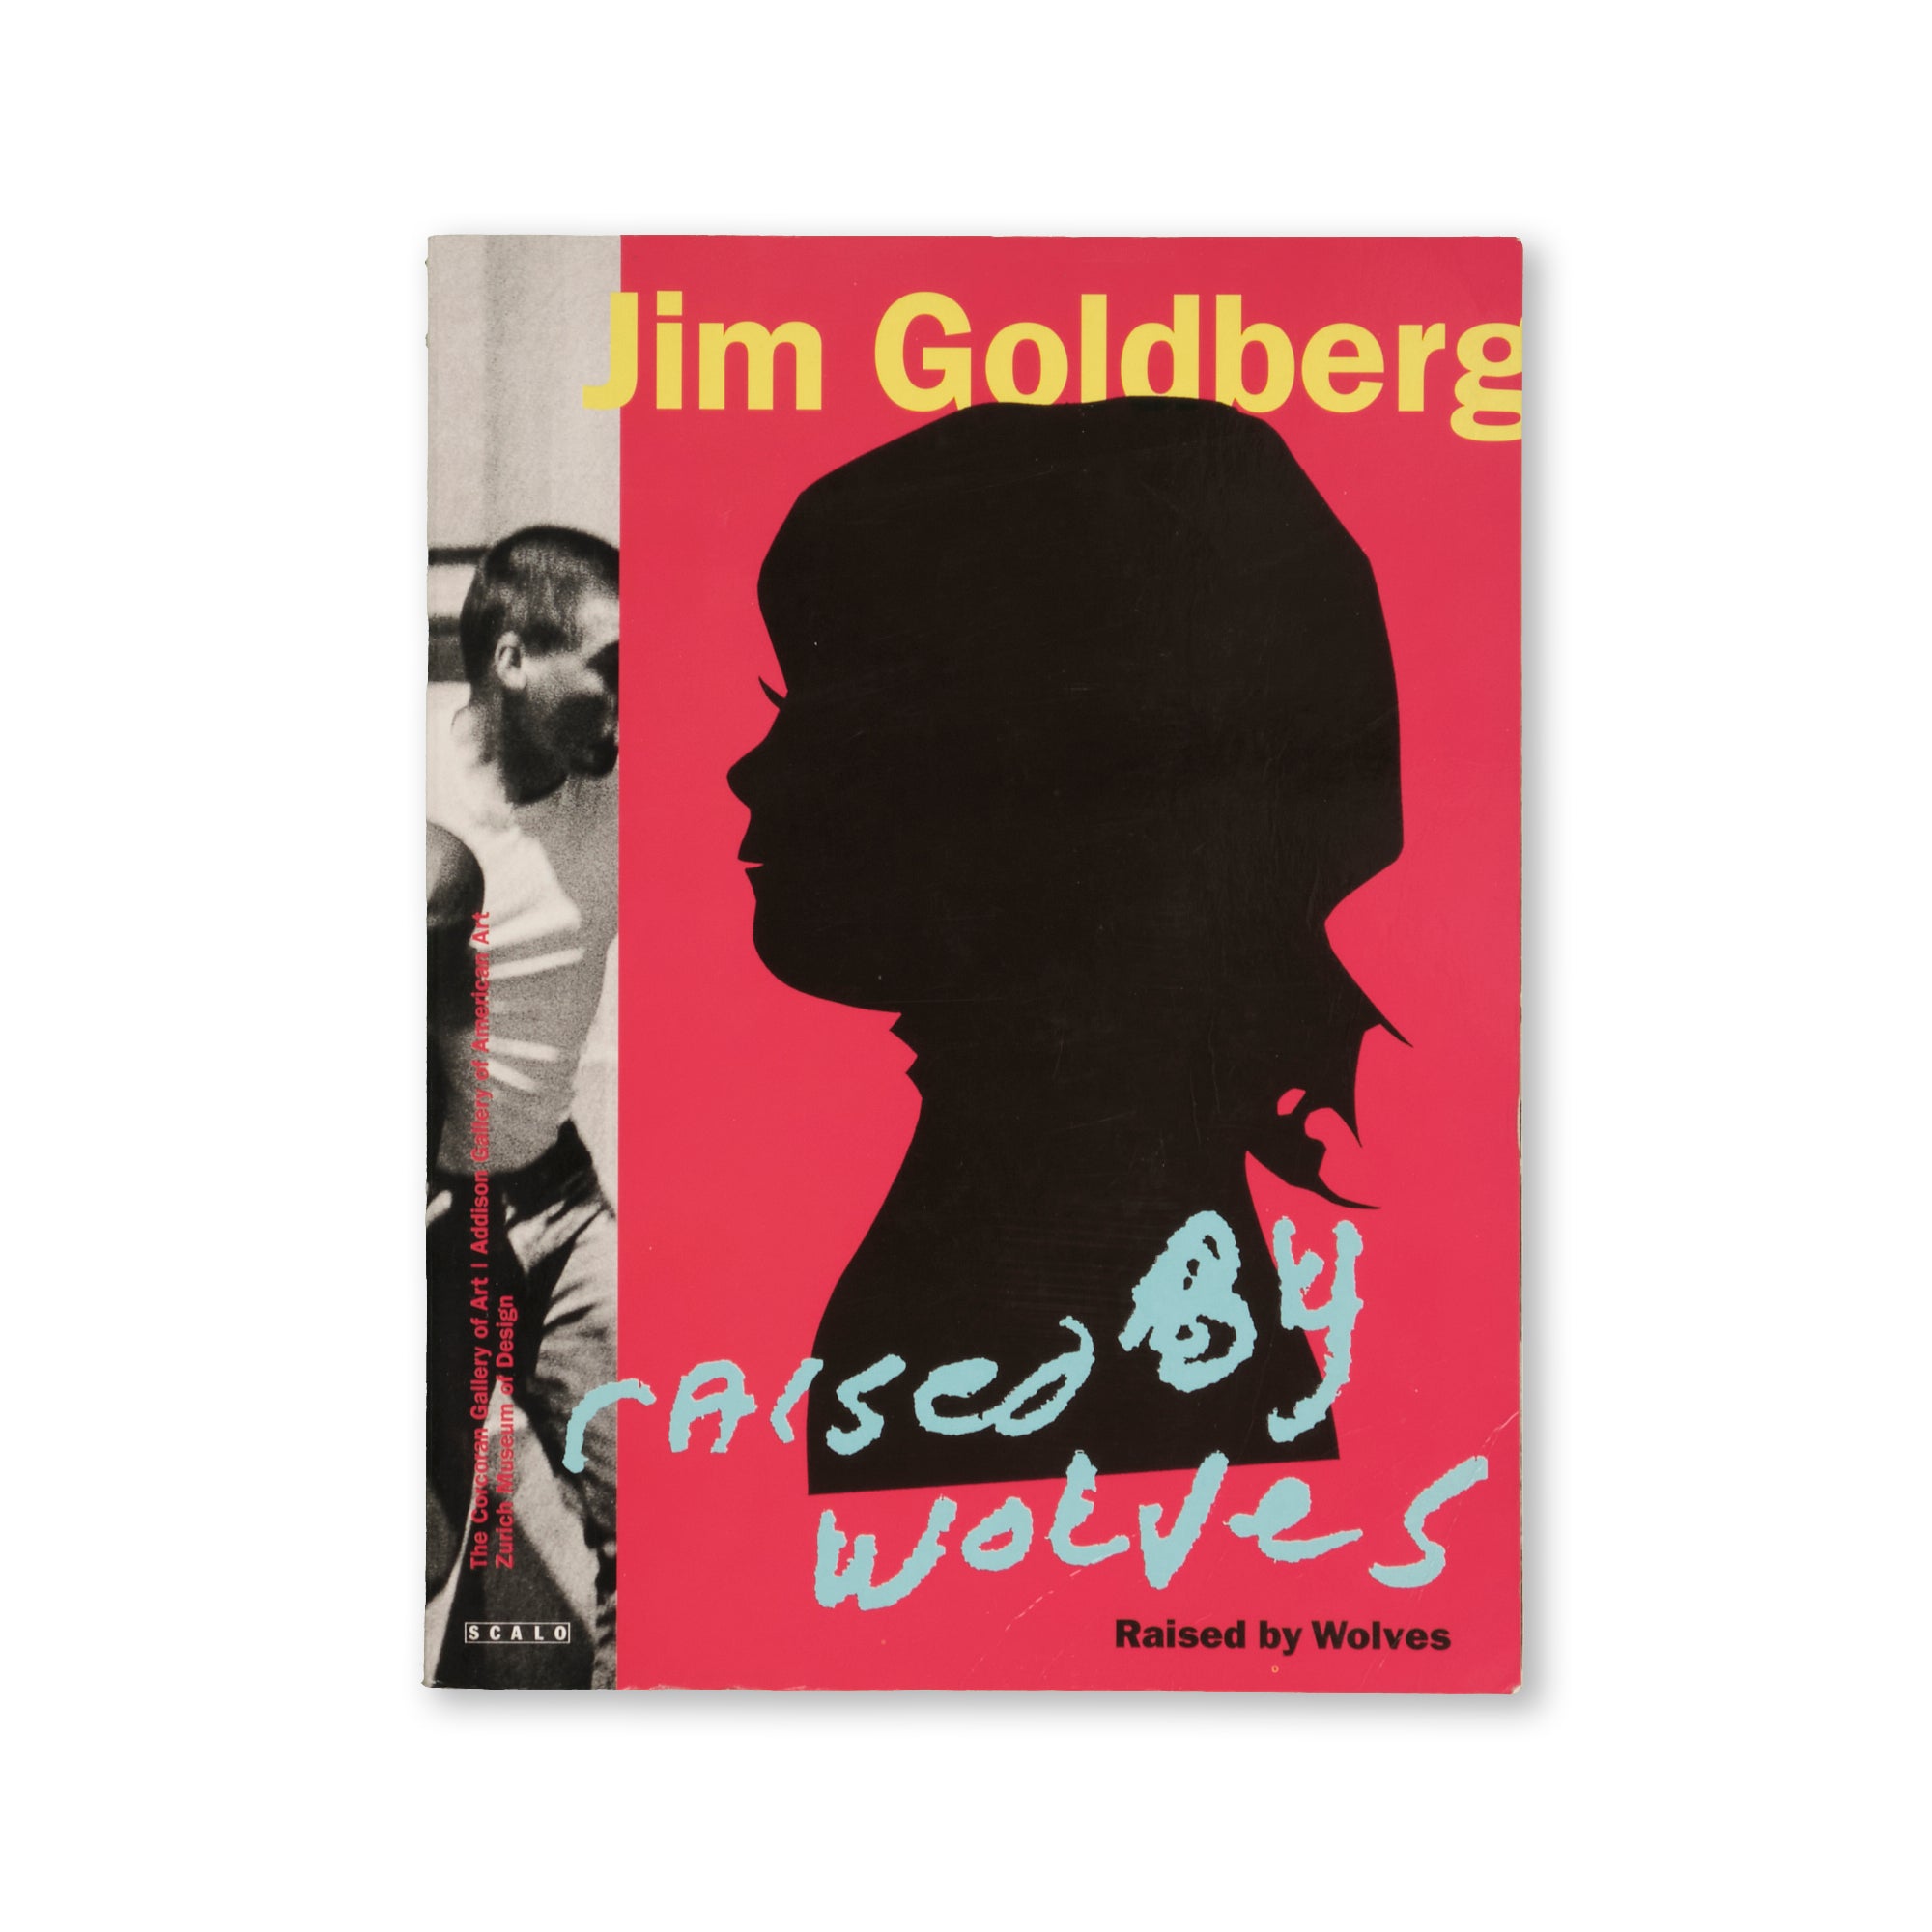 Jim Goldberg - Raised by Wolves